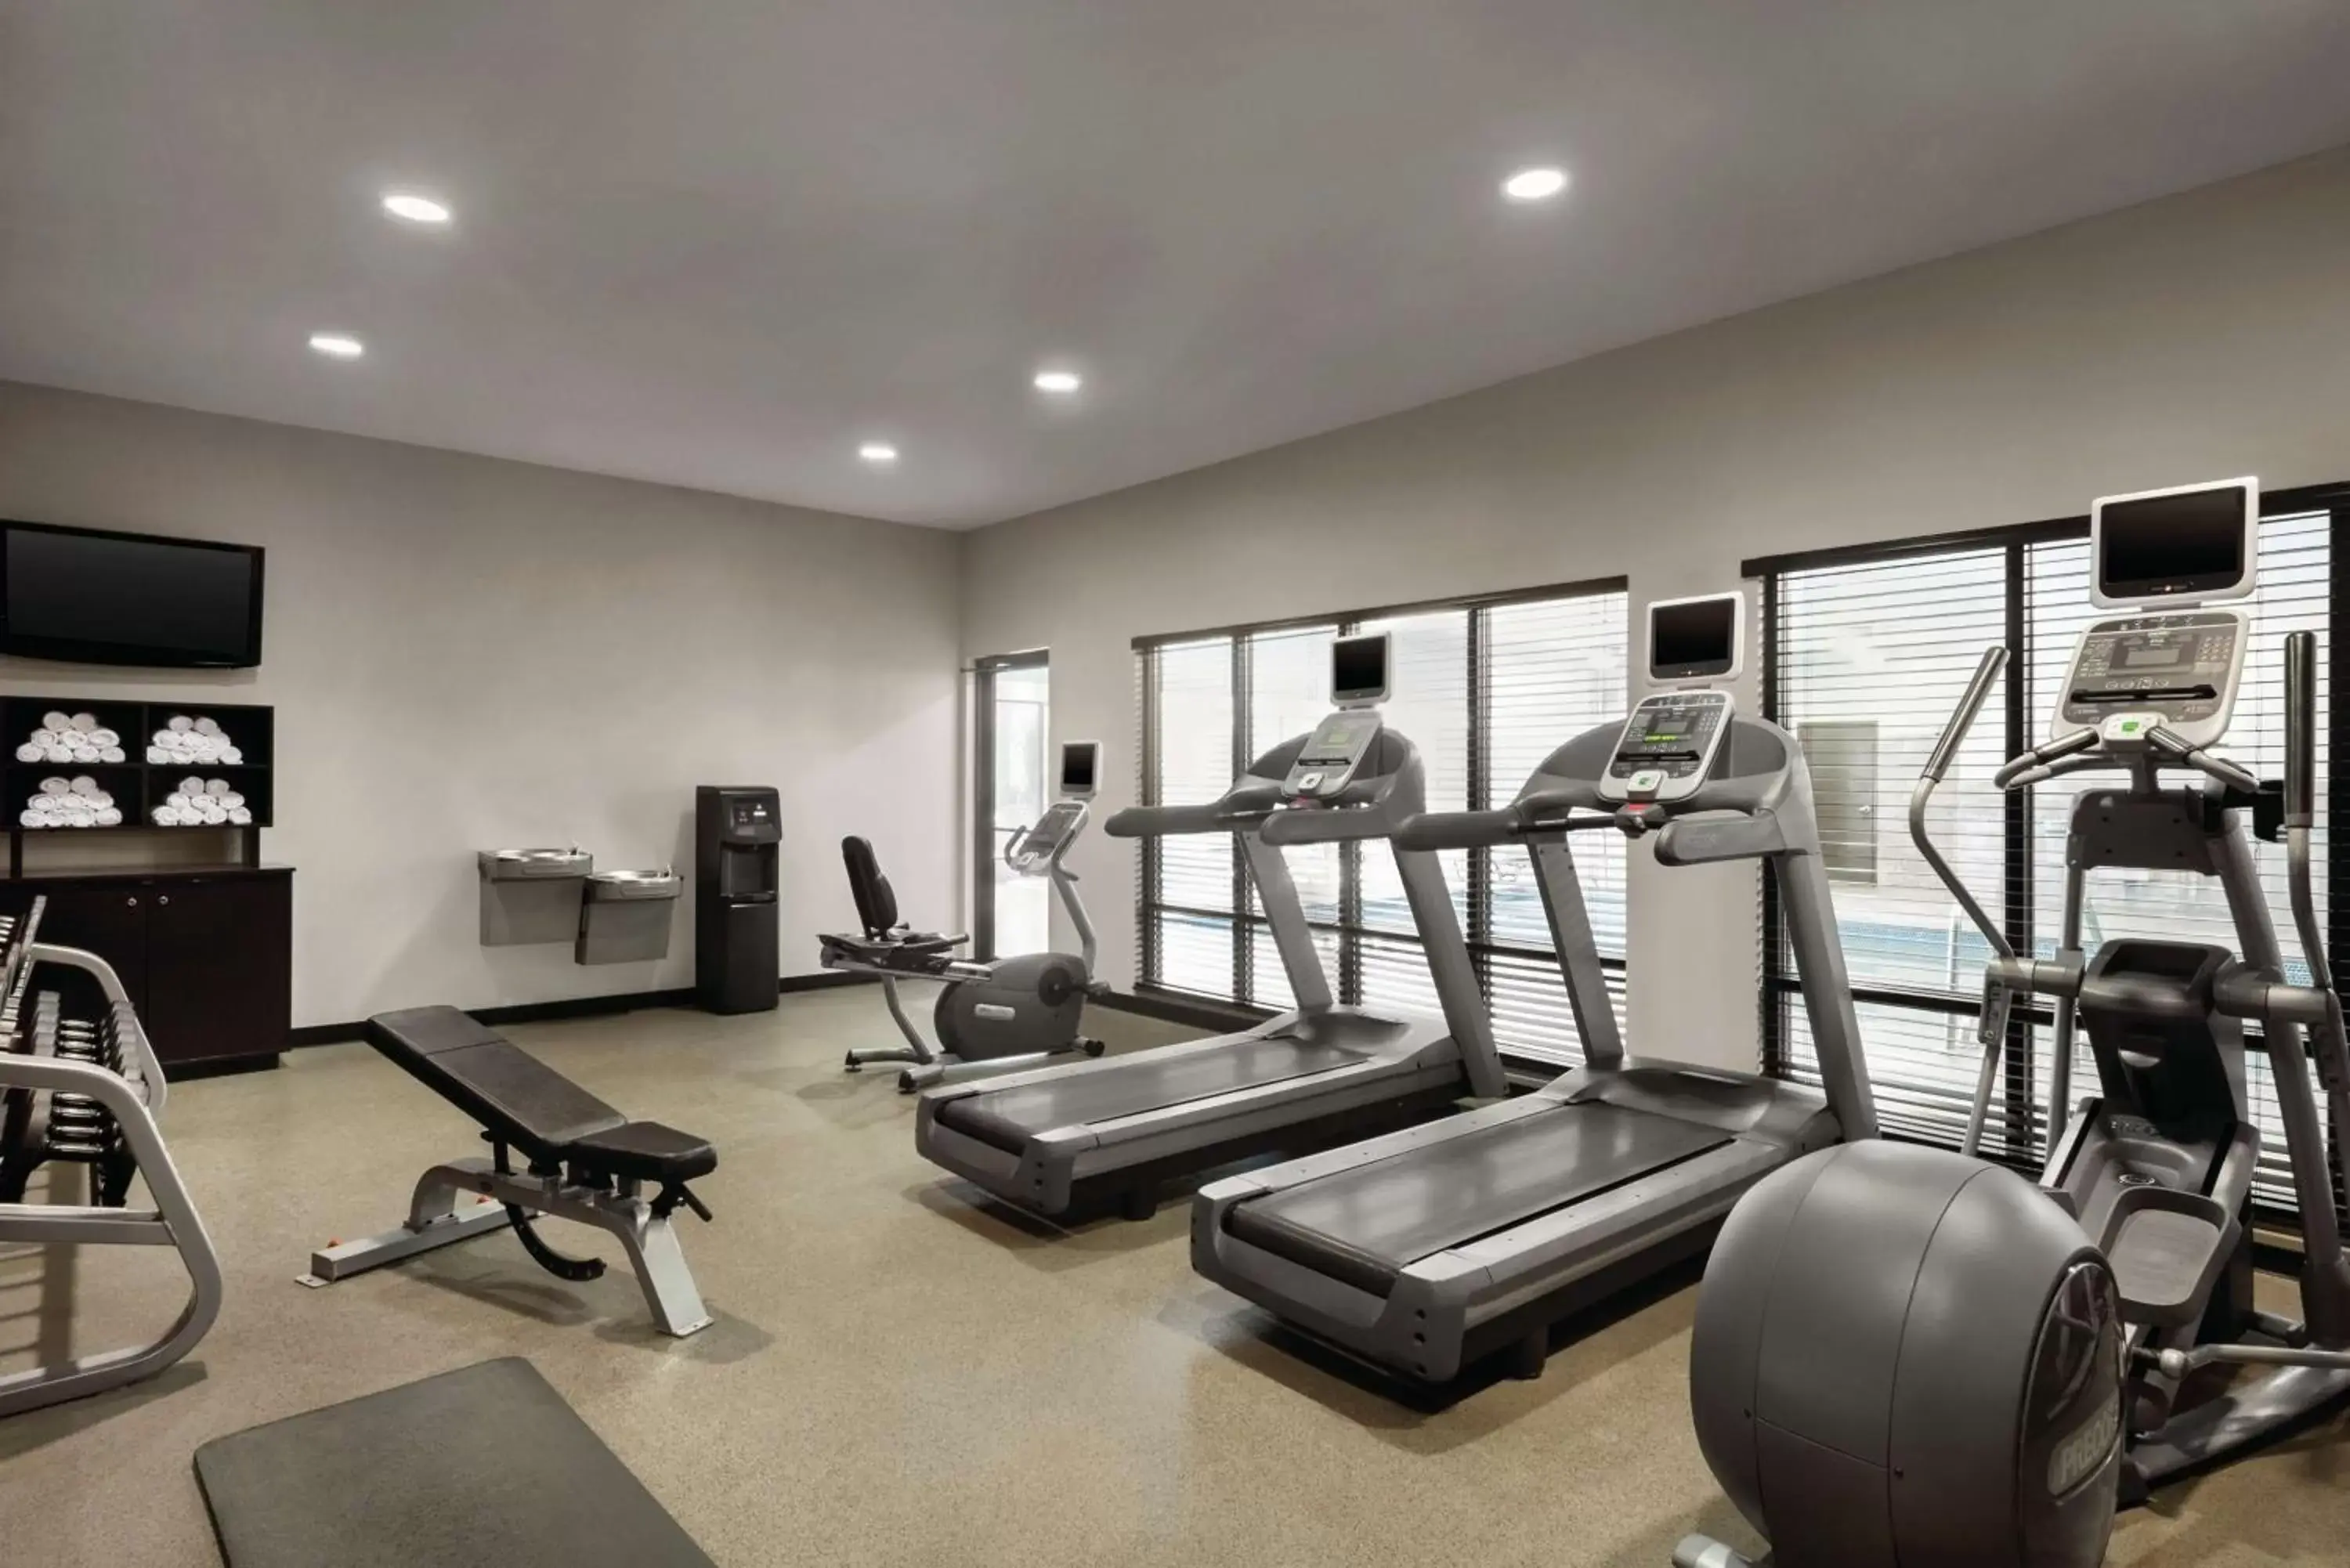 Fitness centre/facilities, Fitness Center/Facilities in Hilton Garden Inn South Bend